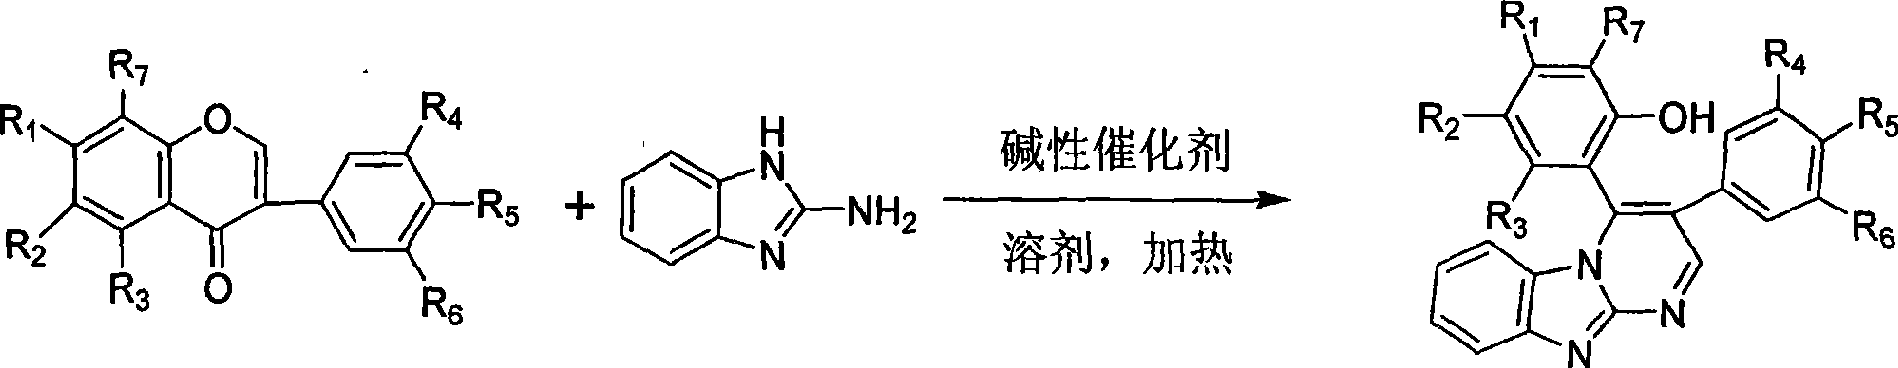 2,3-diaryl pyrimidine [1,2-a]benzimidazole heterocyclic compound, preparation and use thereof